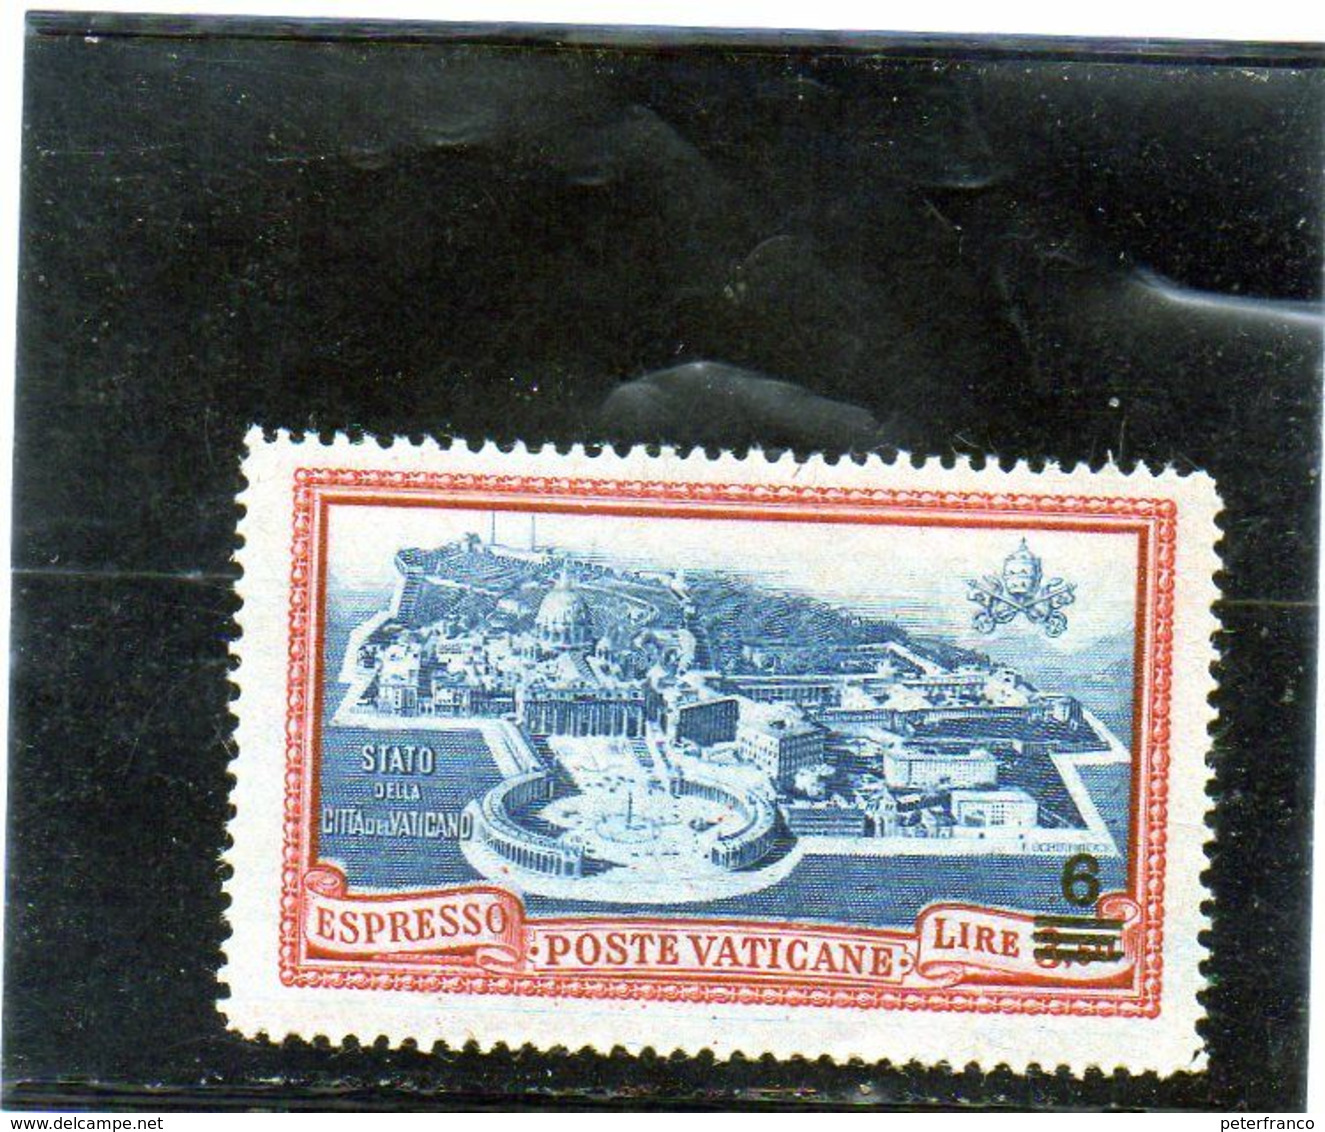 CG46 - 1946 Vaticano - Espresso - Priority Mail